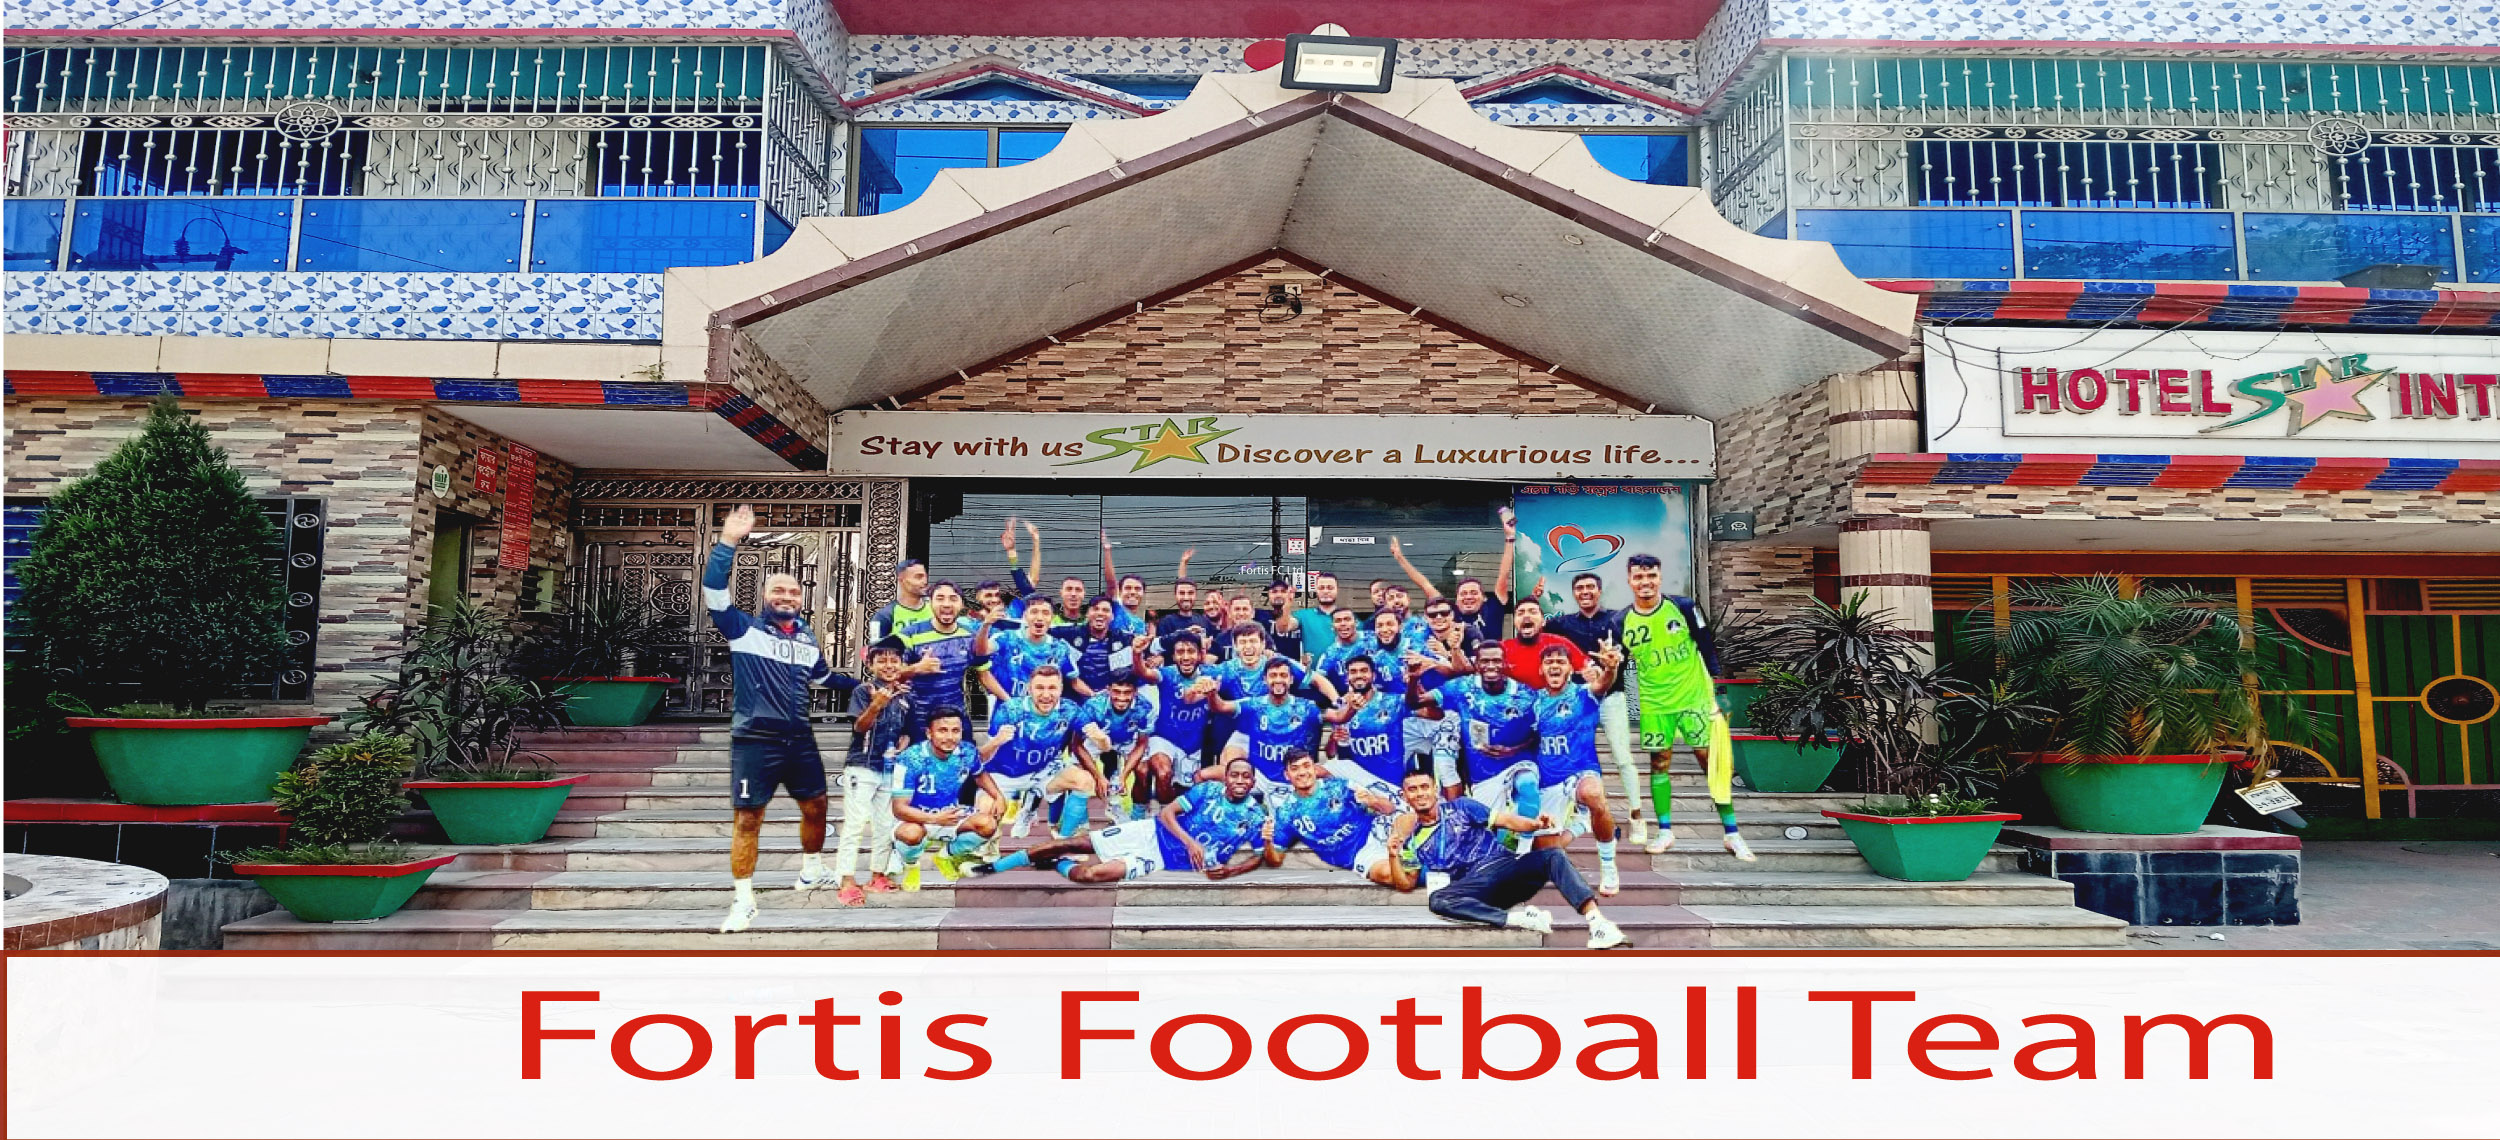 Fortis Football Team's Stay at Hotel Star International